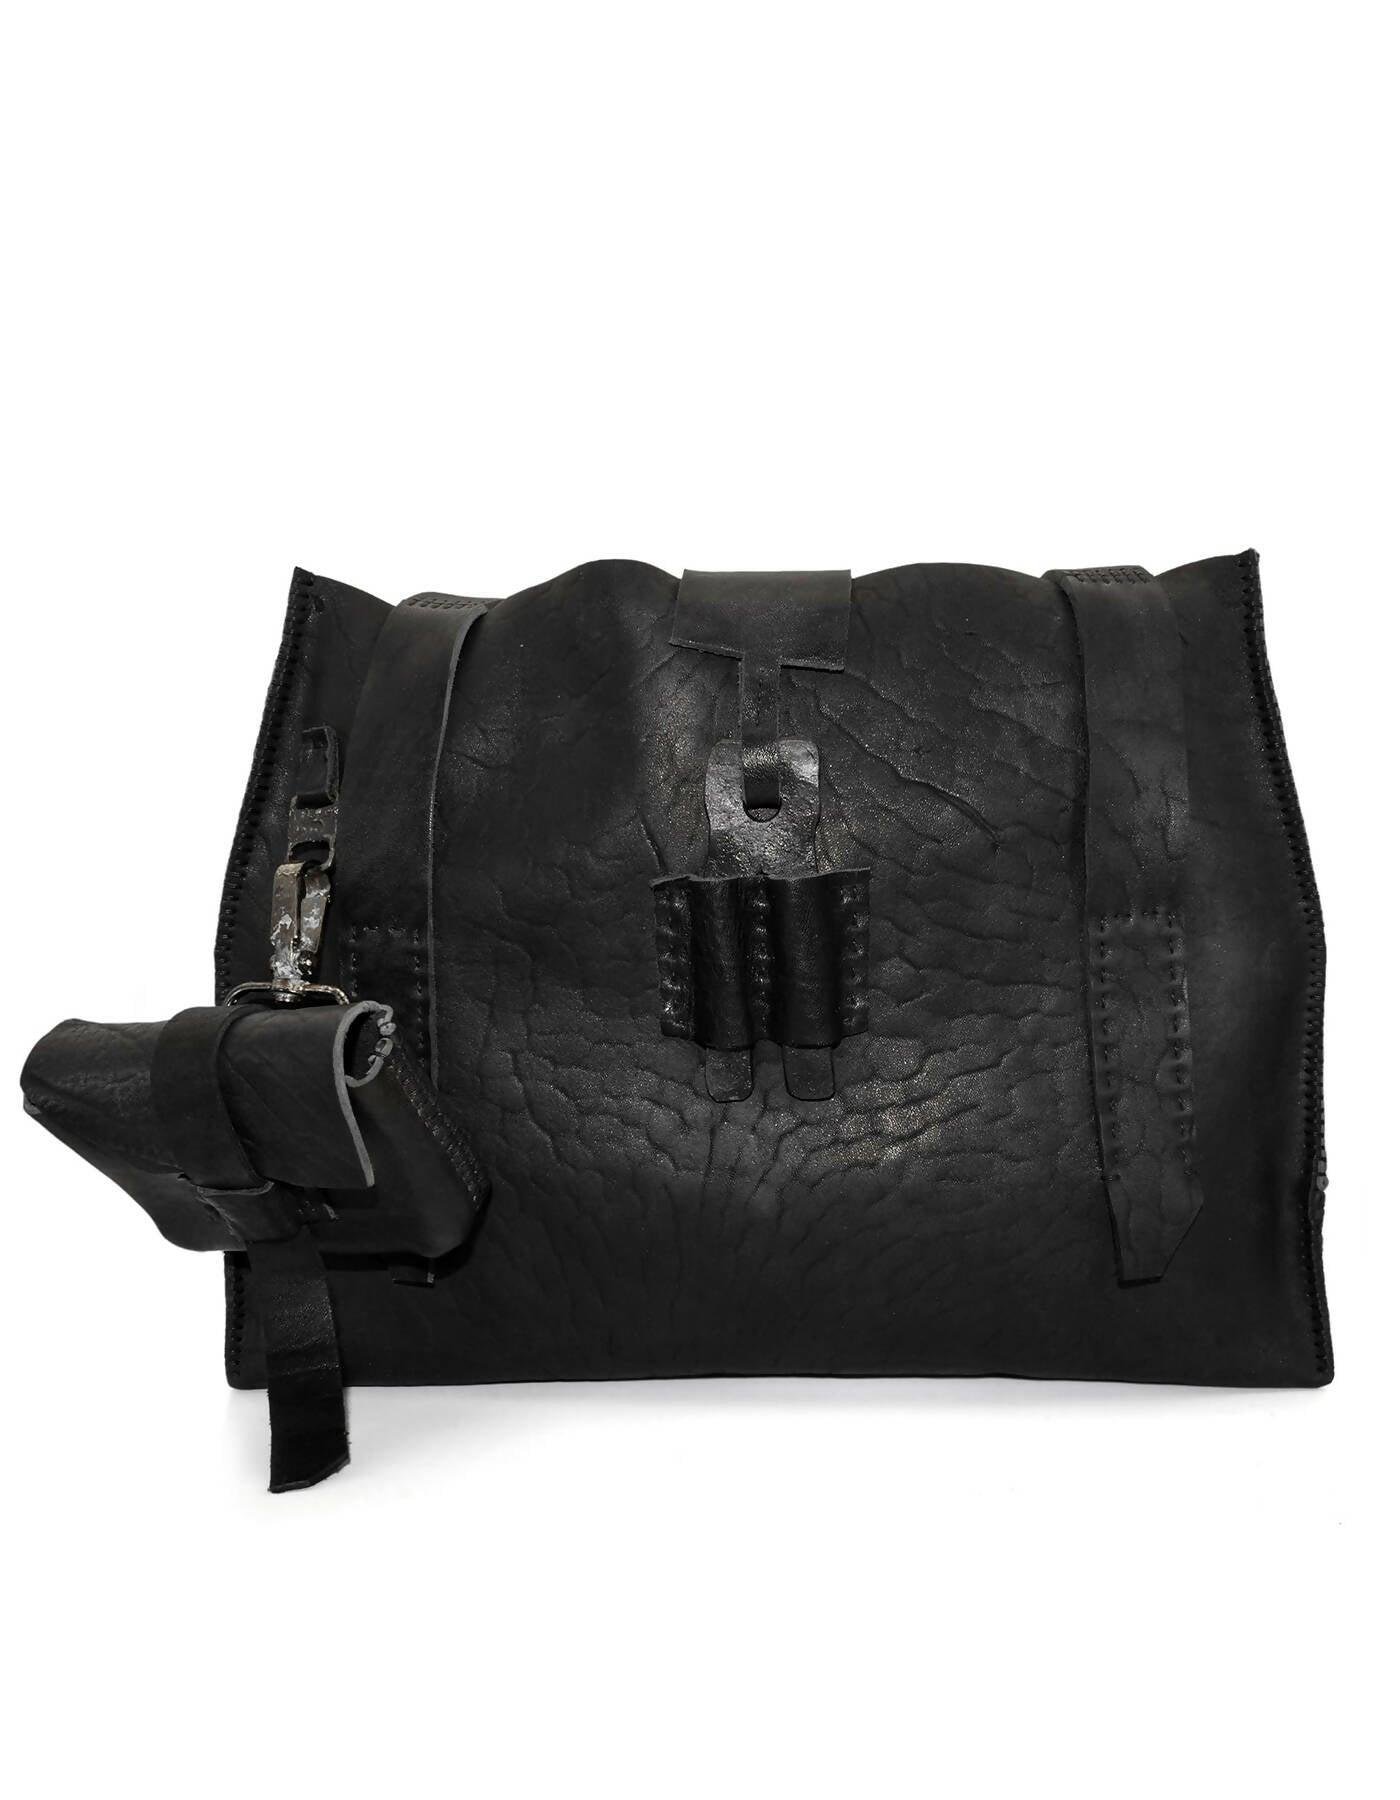 culatta leather handbag by ATELIER SKN